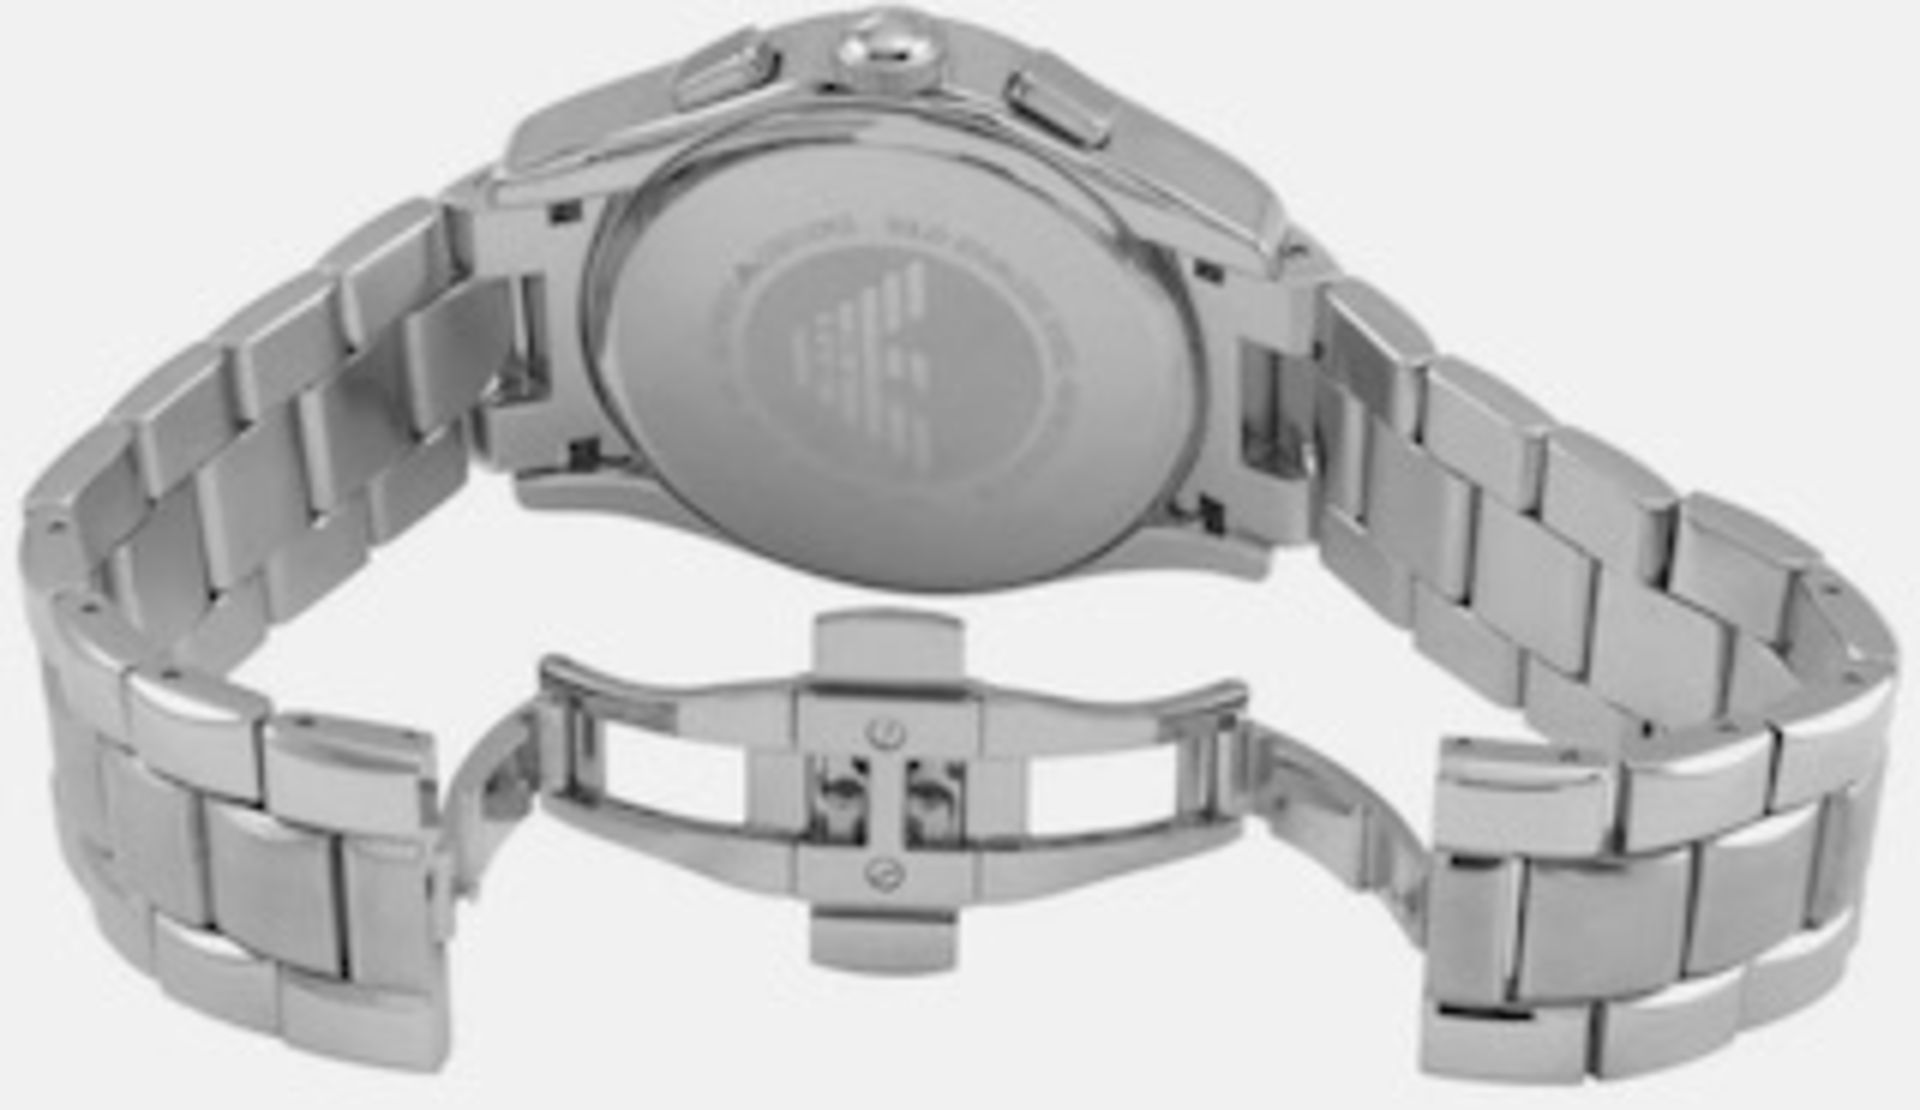 Emporio Armani AR0673 Men's Black Dial Silver Bracelet Quartz Chronograph Watch - Image 4 of 8